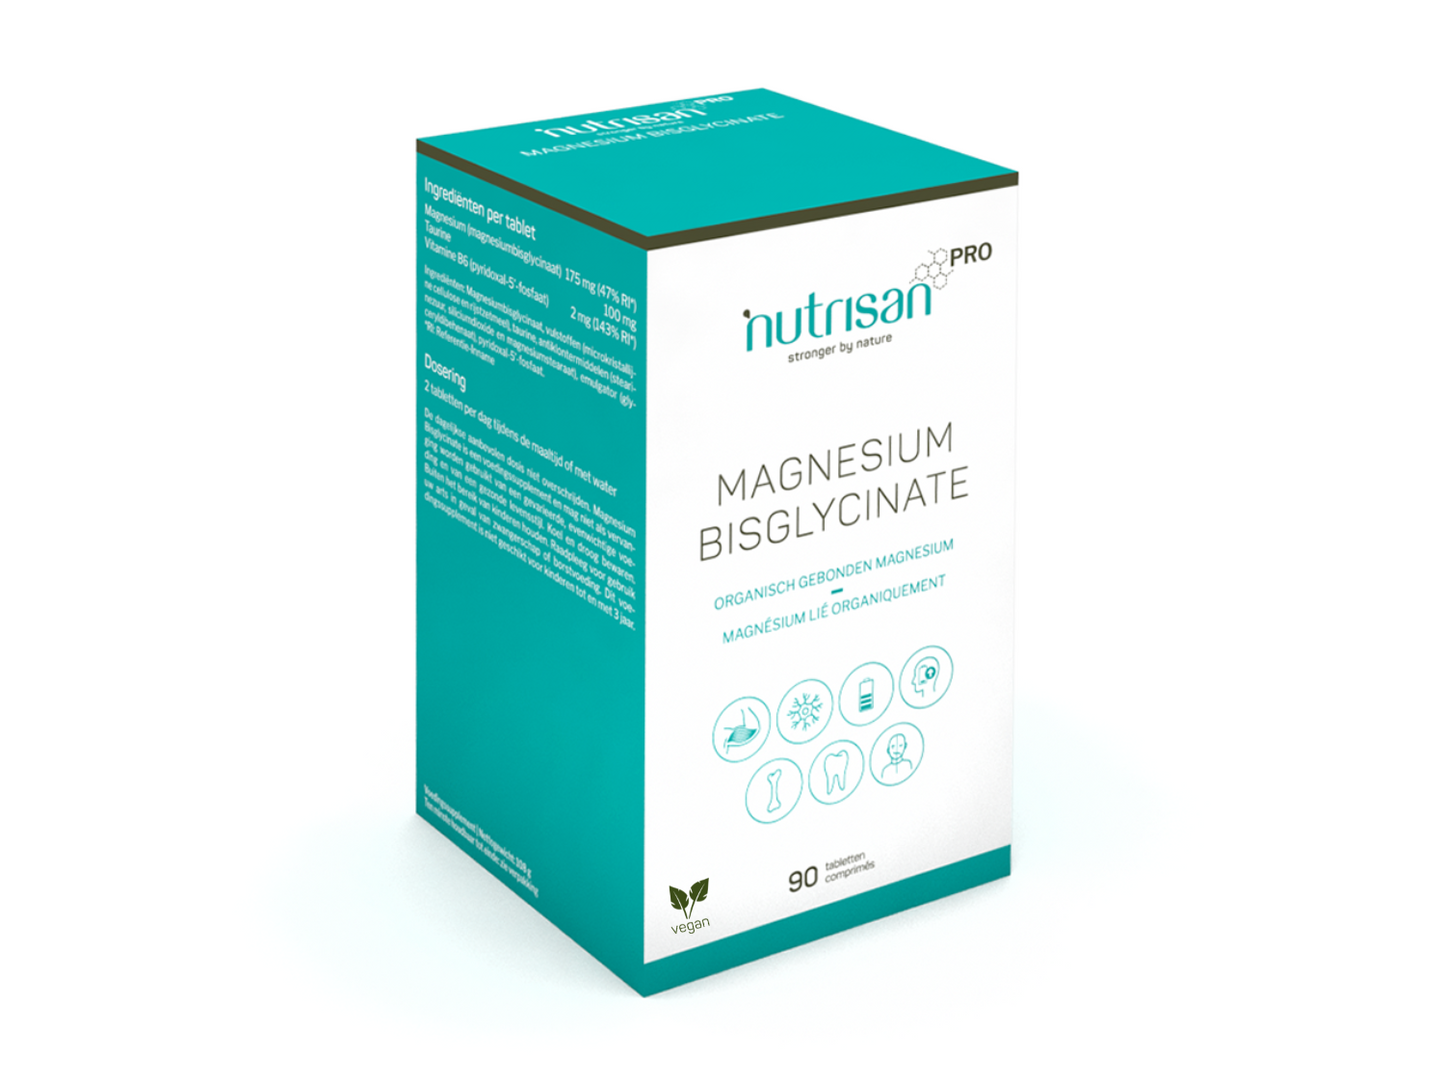 NutrisanPro Magnesium Bisglycinate - Magnesium supplement - 90 tabletten - Organisch gebonden magnesium